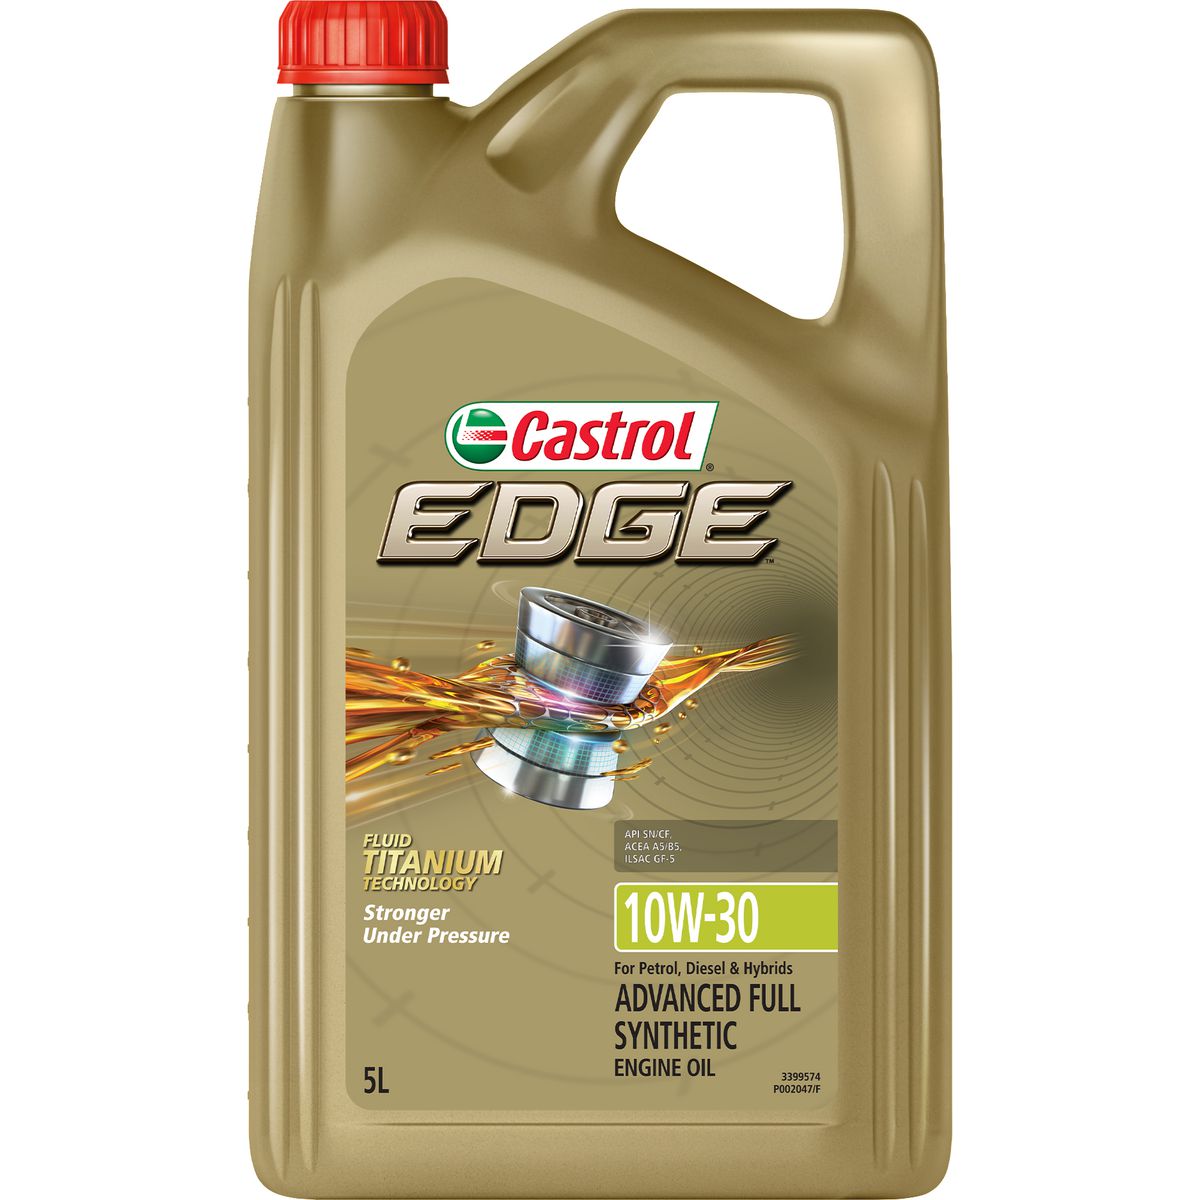 Castrol EDGE Full Synthetic 5W-30 Engine Oil 5L - 3413348